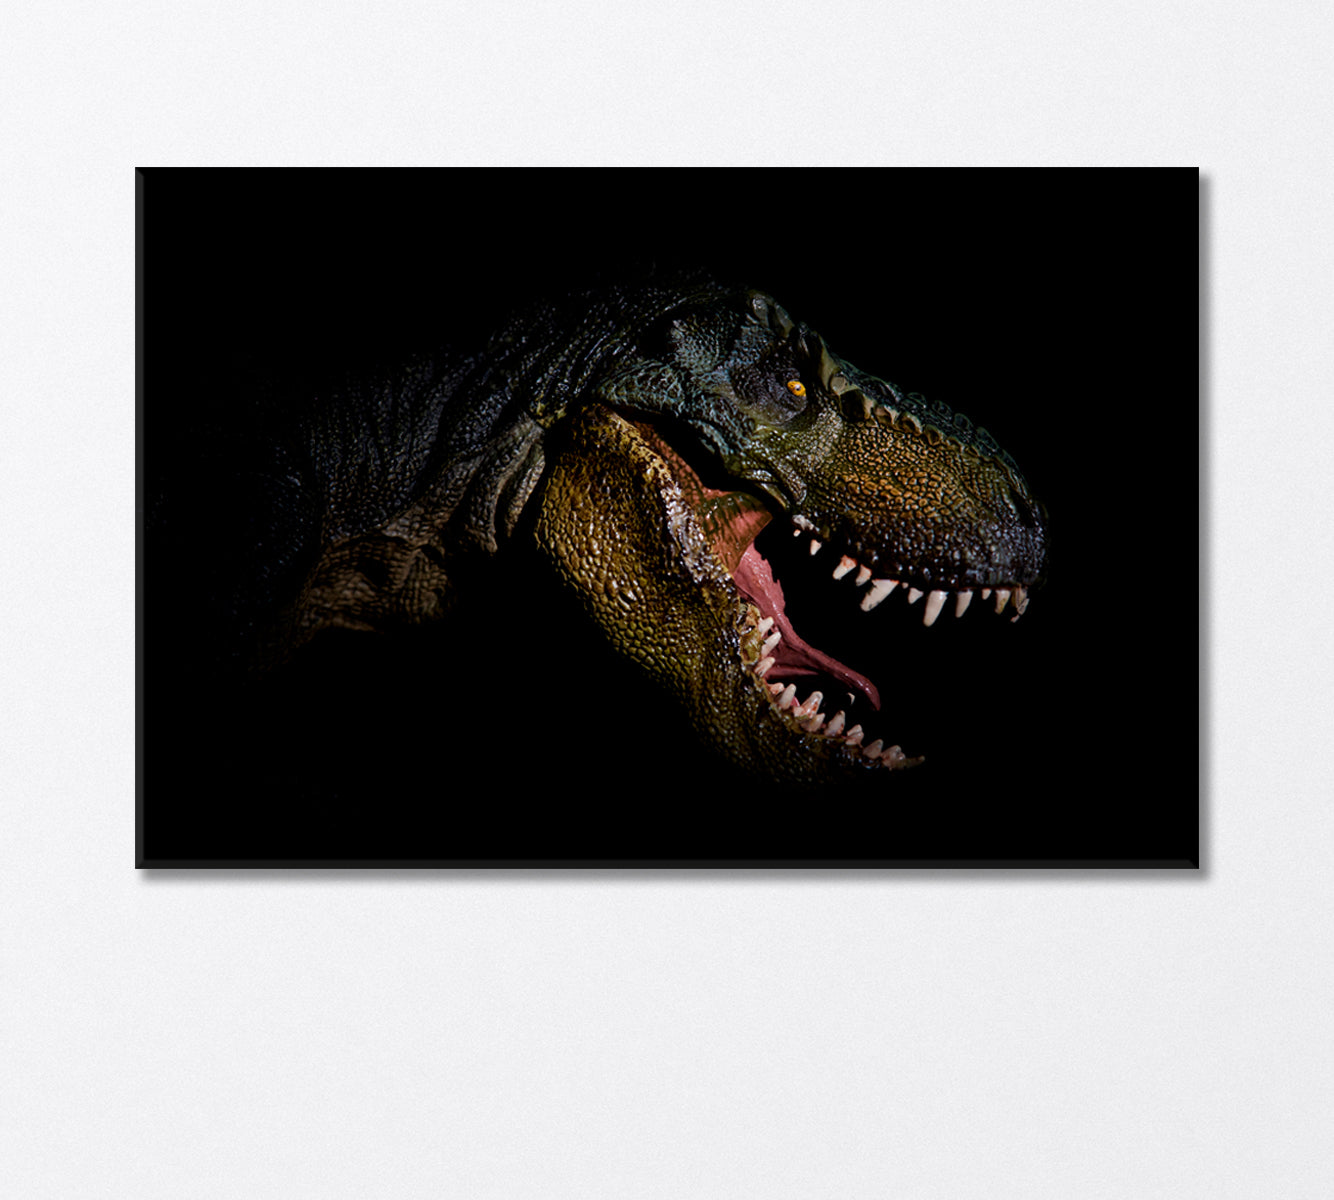 Dinosaur Head in the Dark Canvas Print-Canvas Print-CetArt-1 Panel-24x16 inches-CetArt